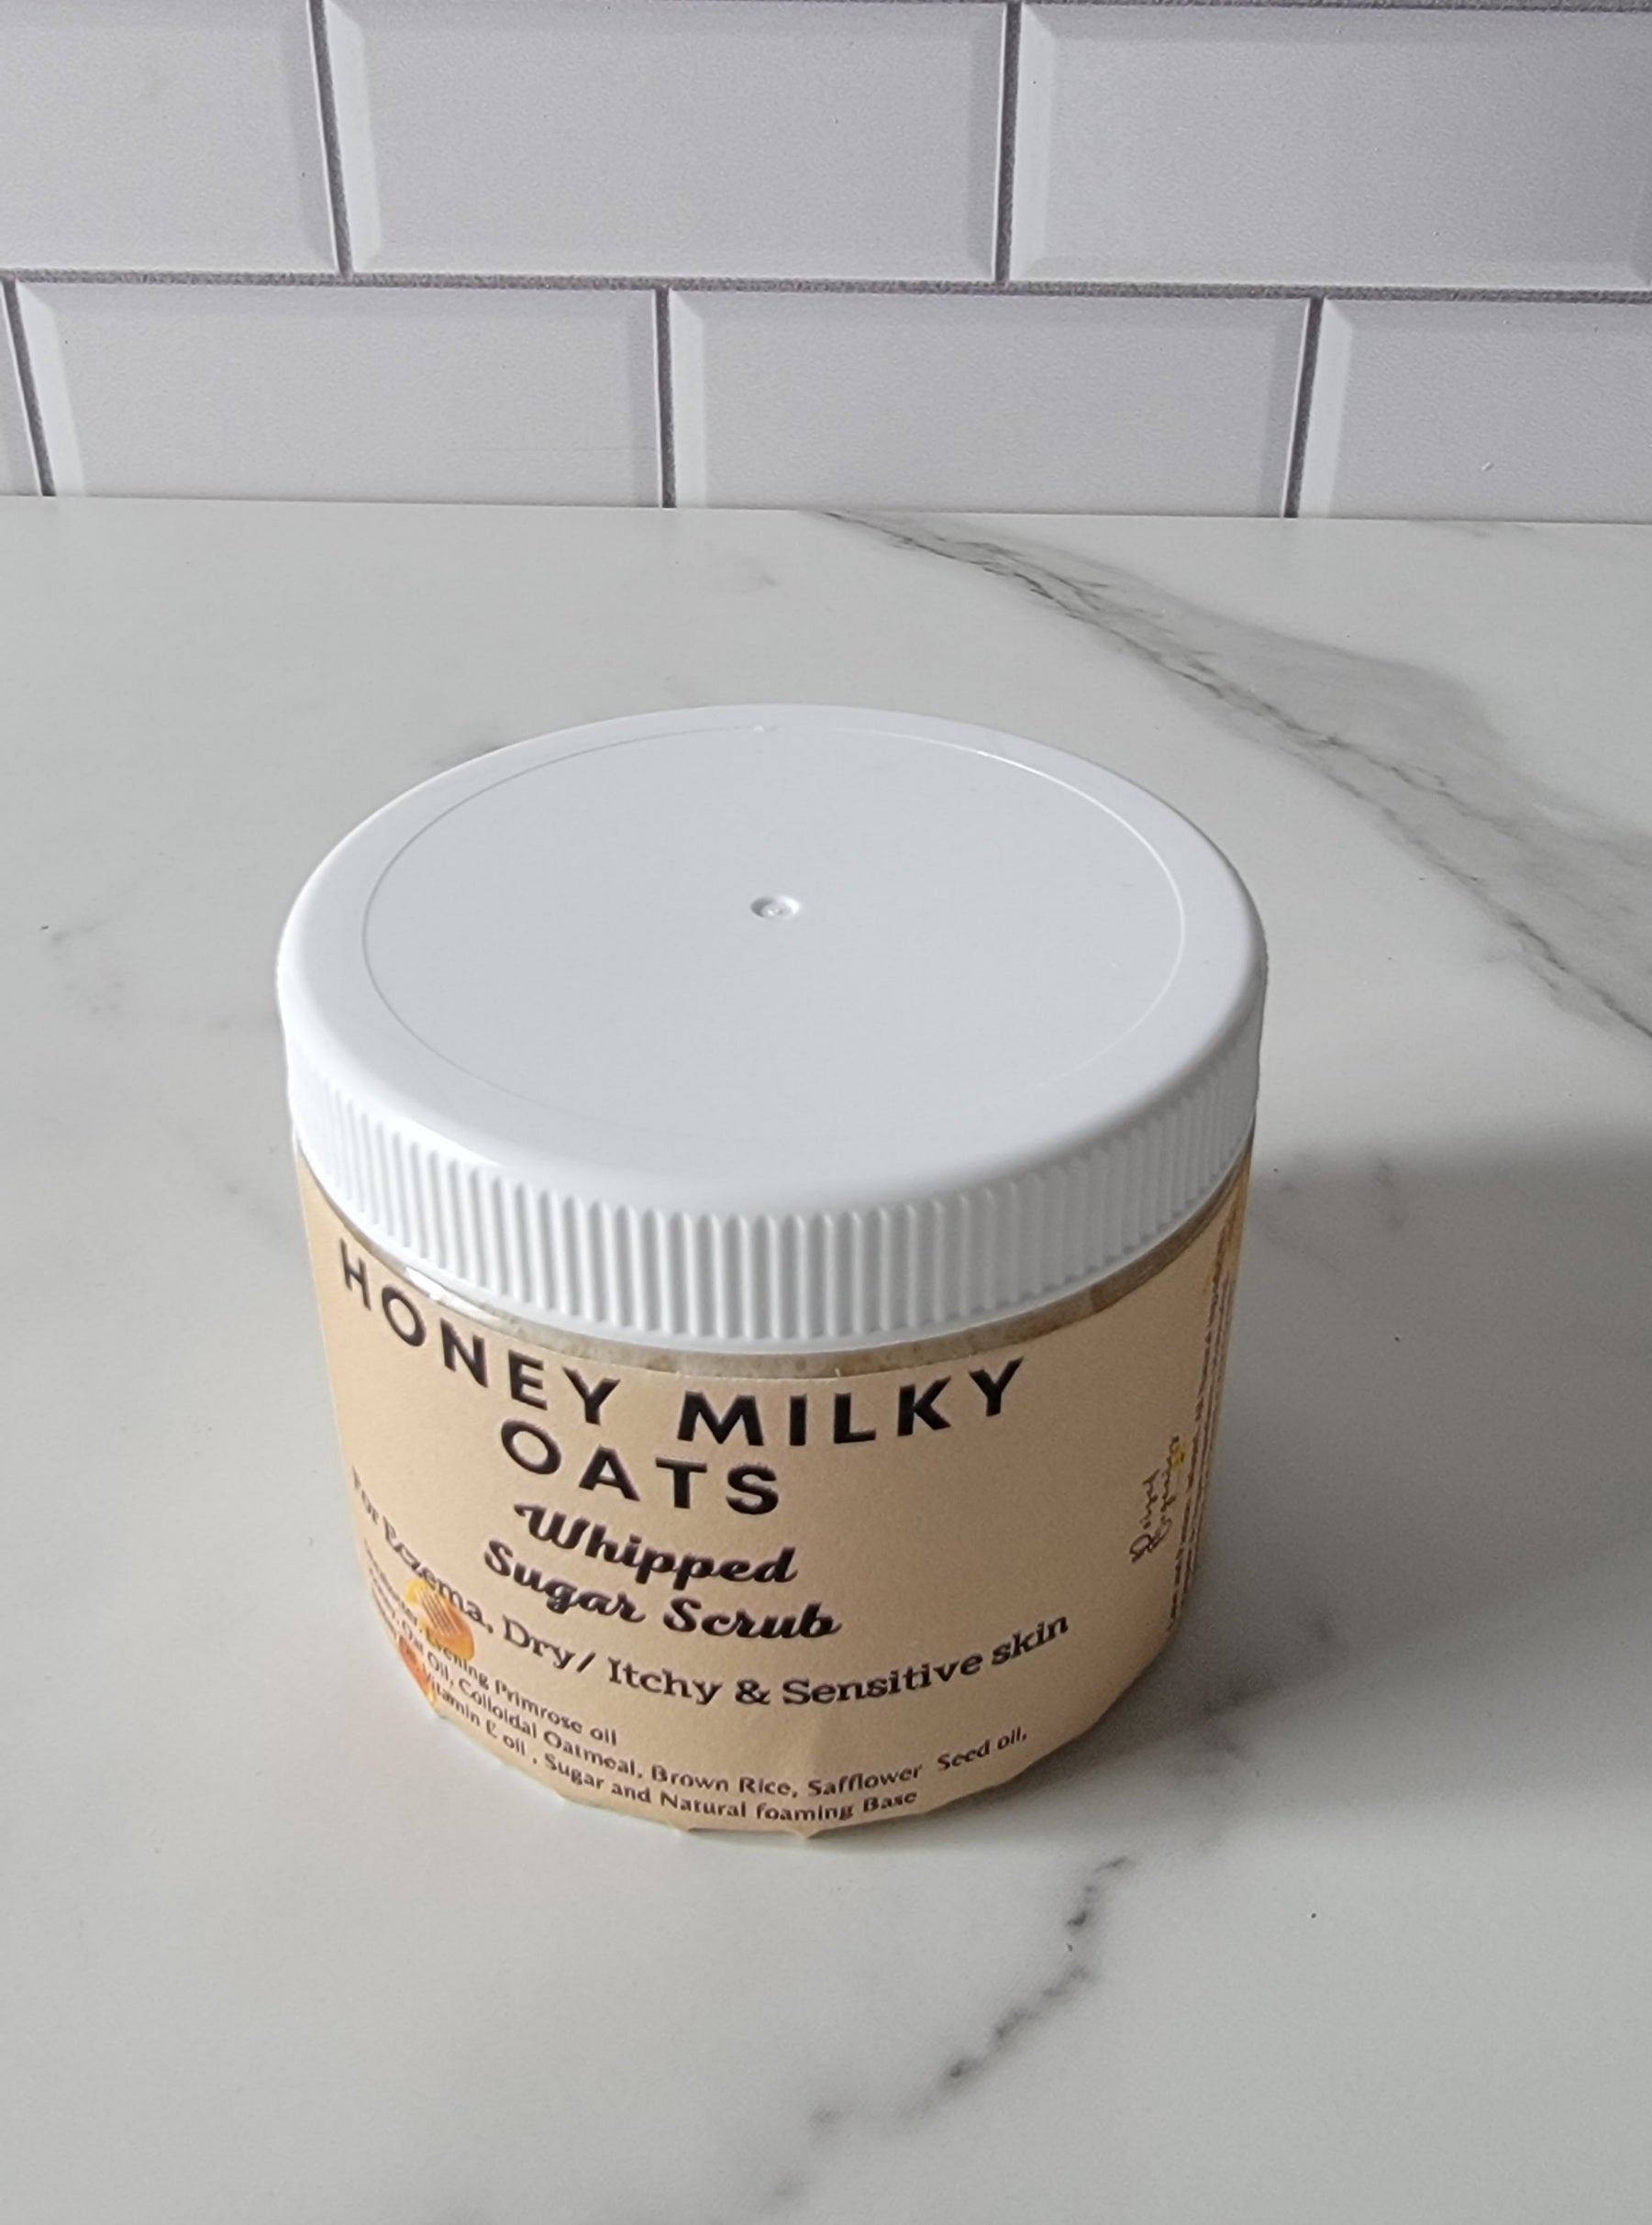 Honey Milky Oats whipped Body Scrub